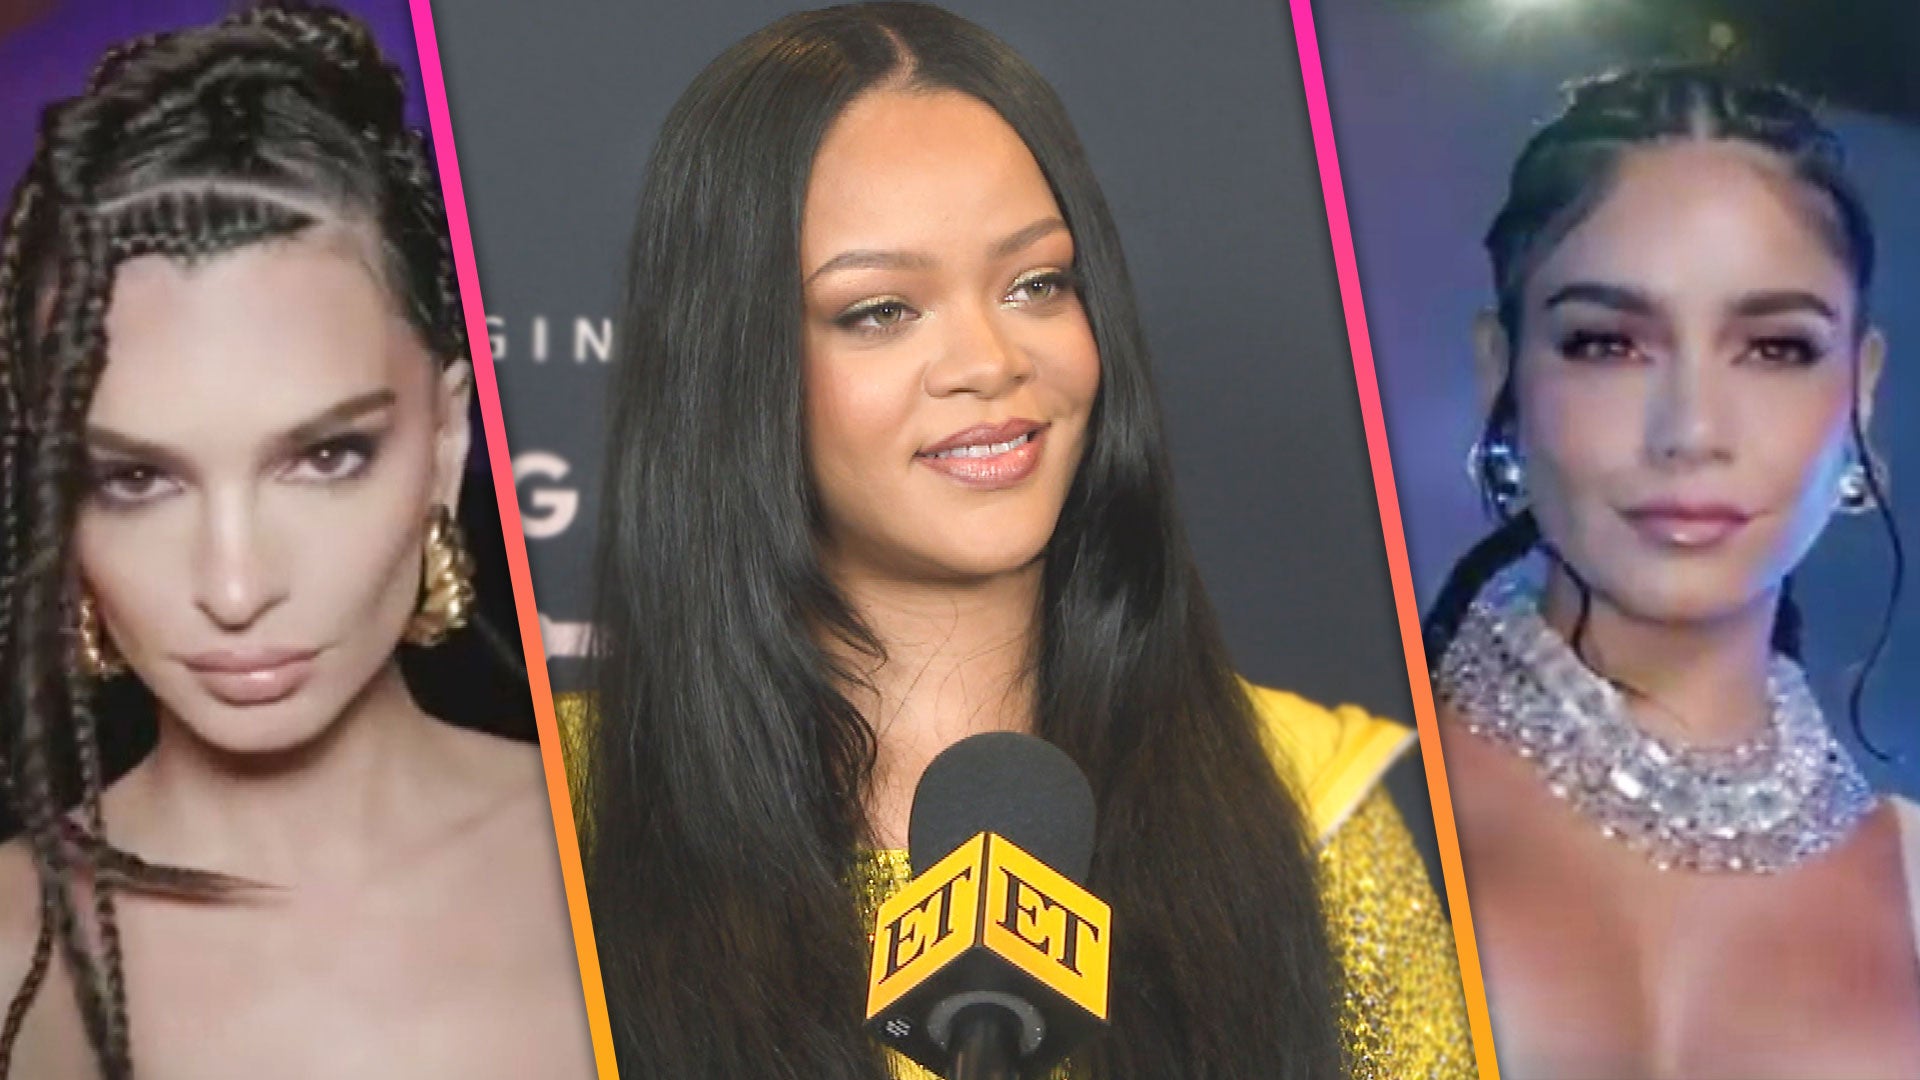 Rihanna Savage x Fenty 2020 set designer: “I think we took it even